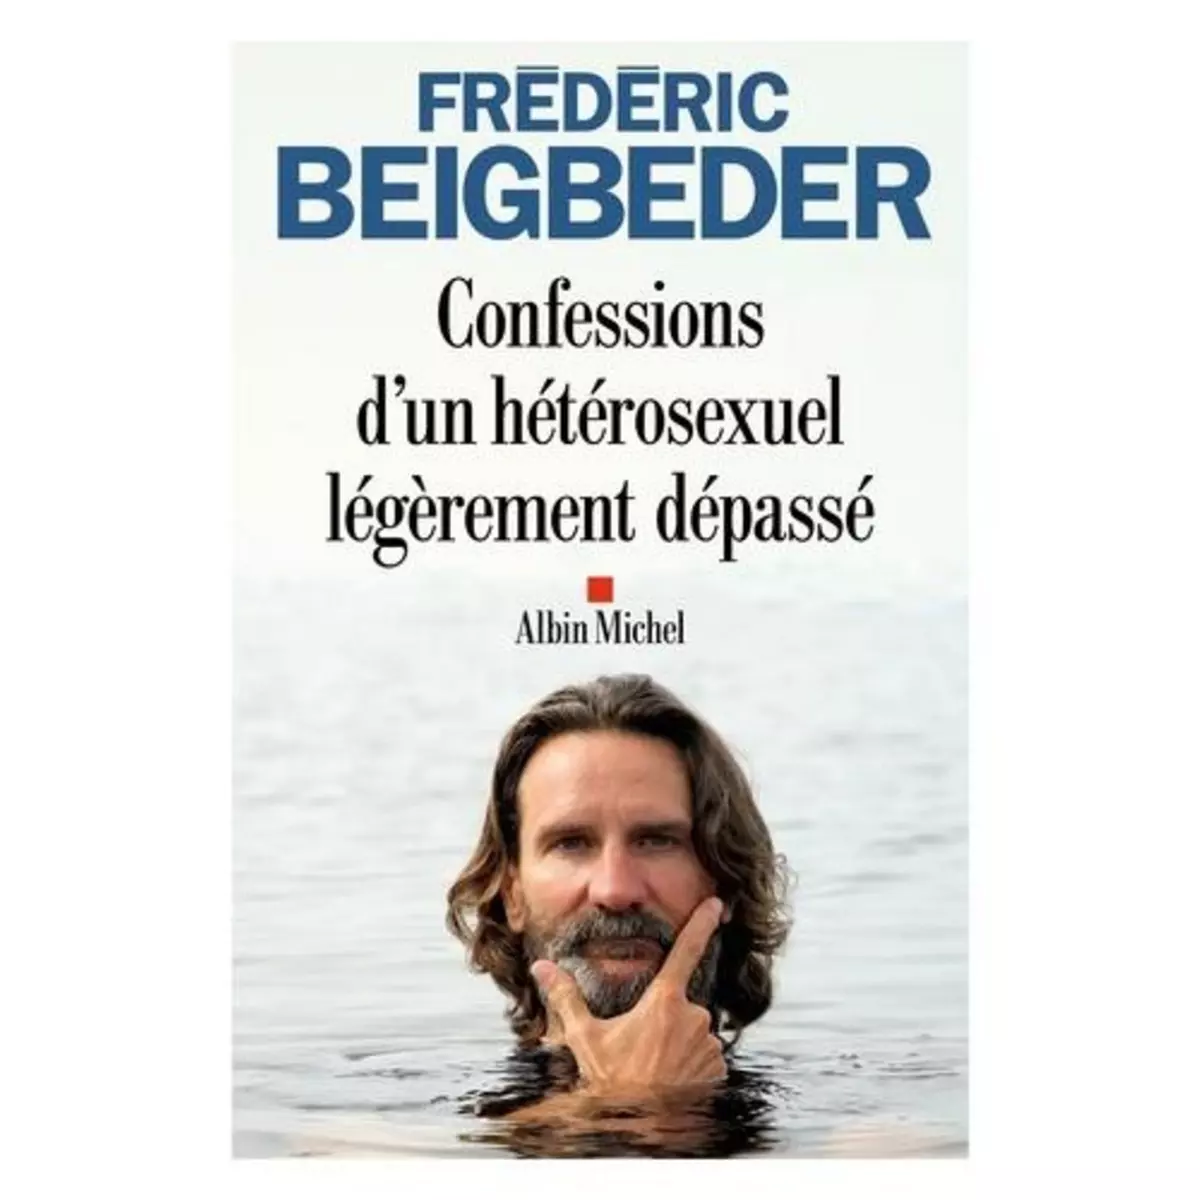  CONFESSIONS D'UN HETEROSEXUEL LEGEREMENT DEPASSE, Beigbeder Frédéric